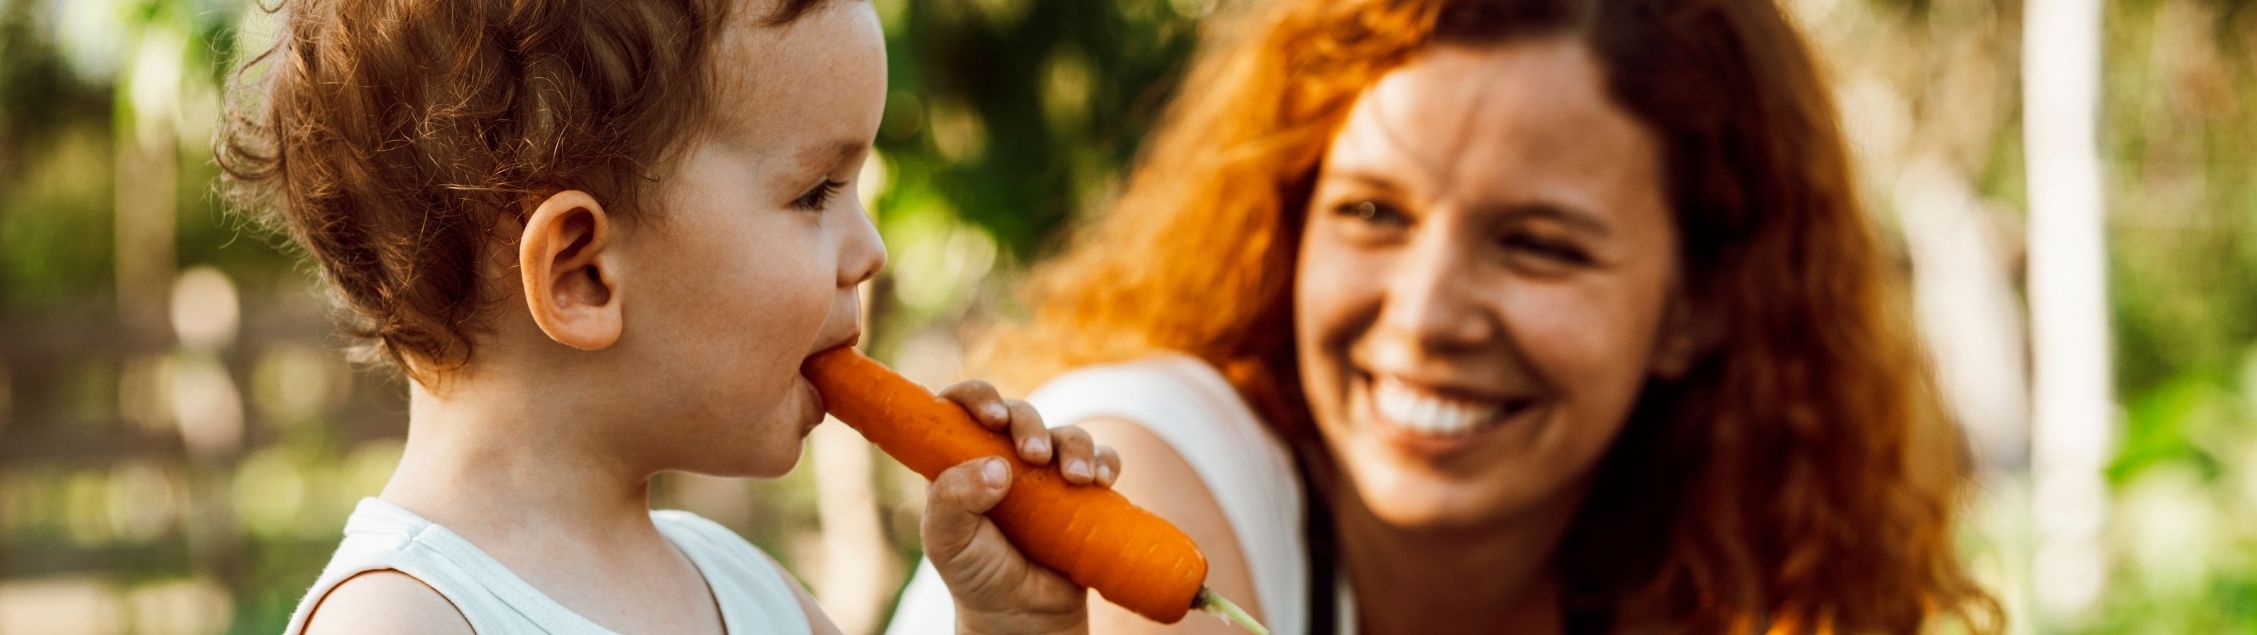 Toddler eating a fresh carrot